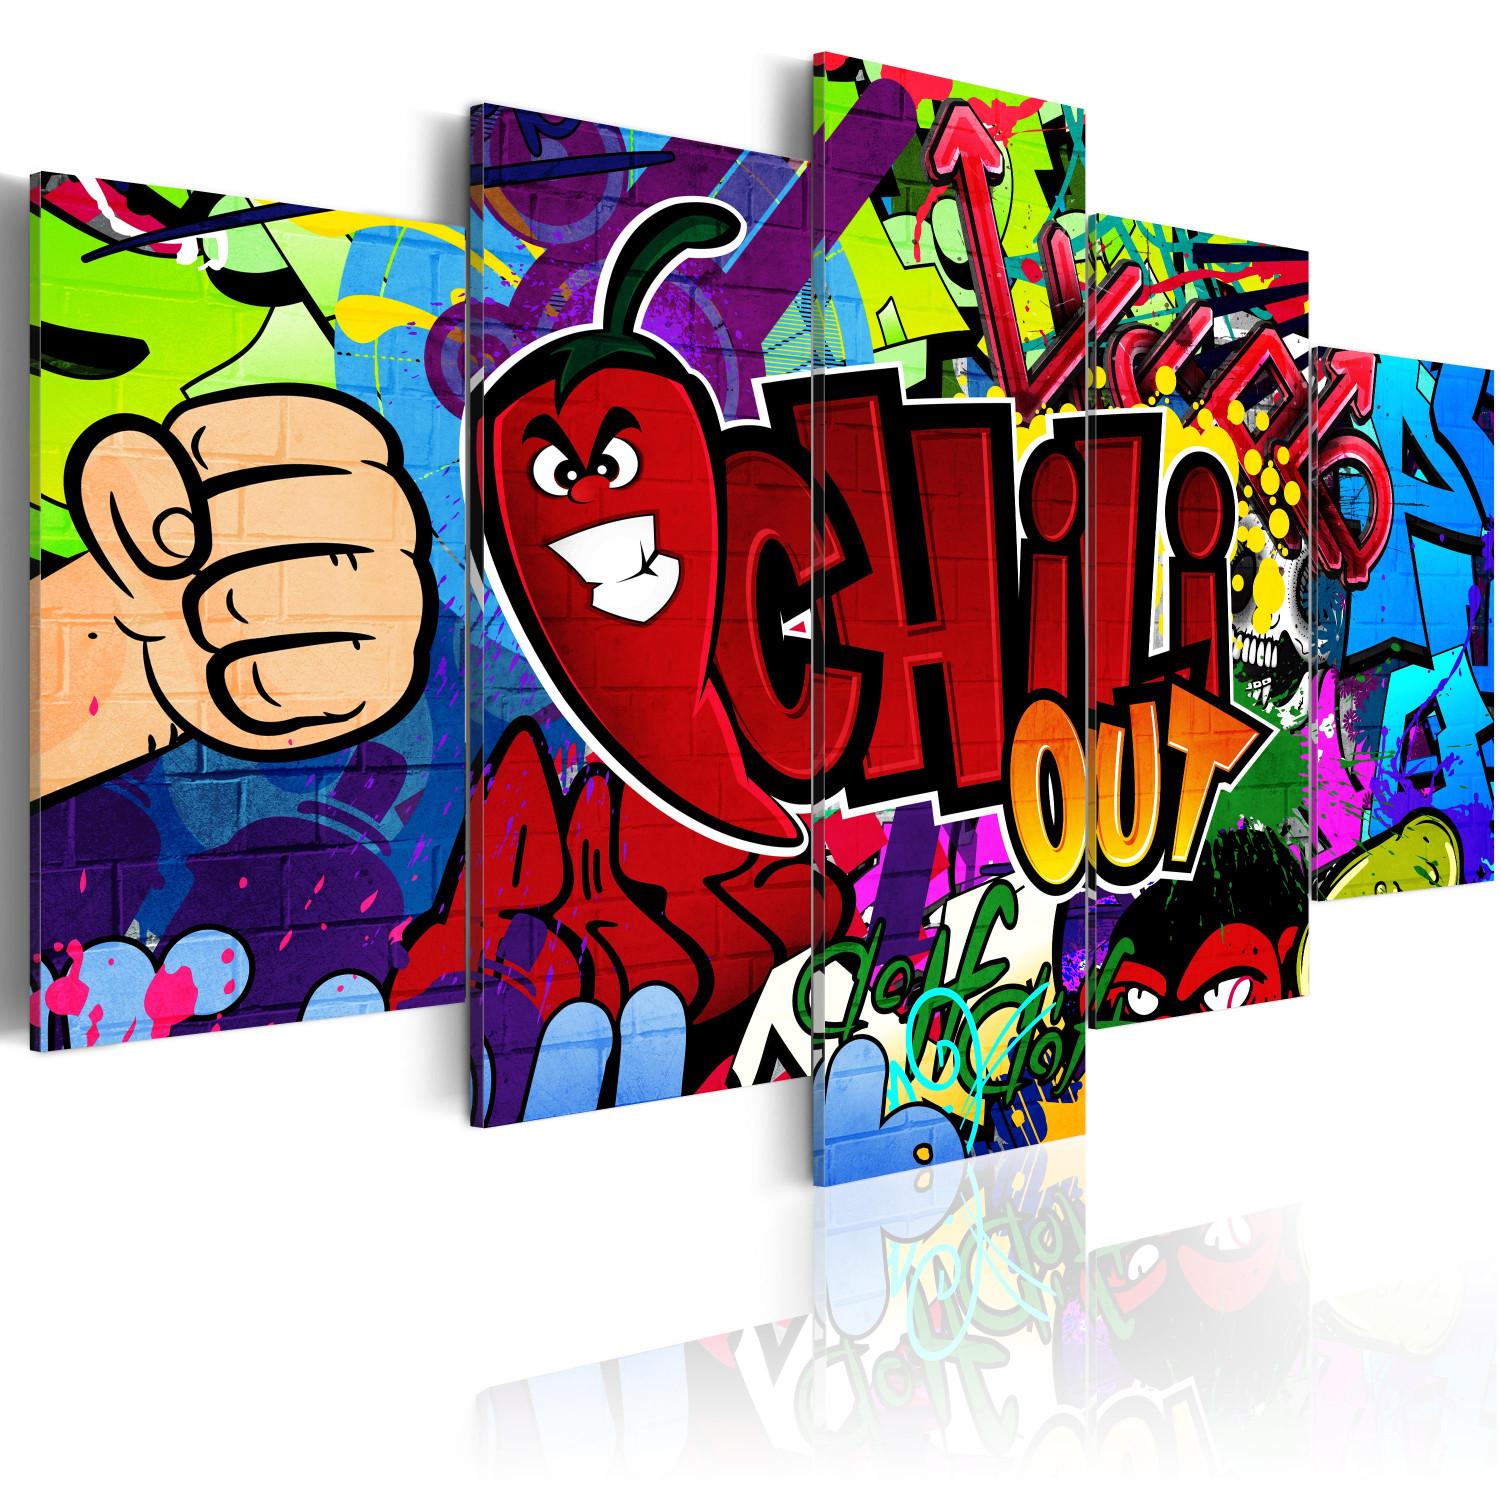 Cuadro Chili out - graffiti